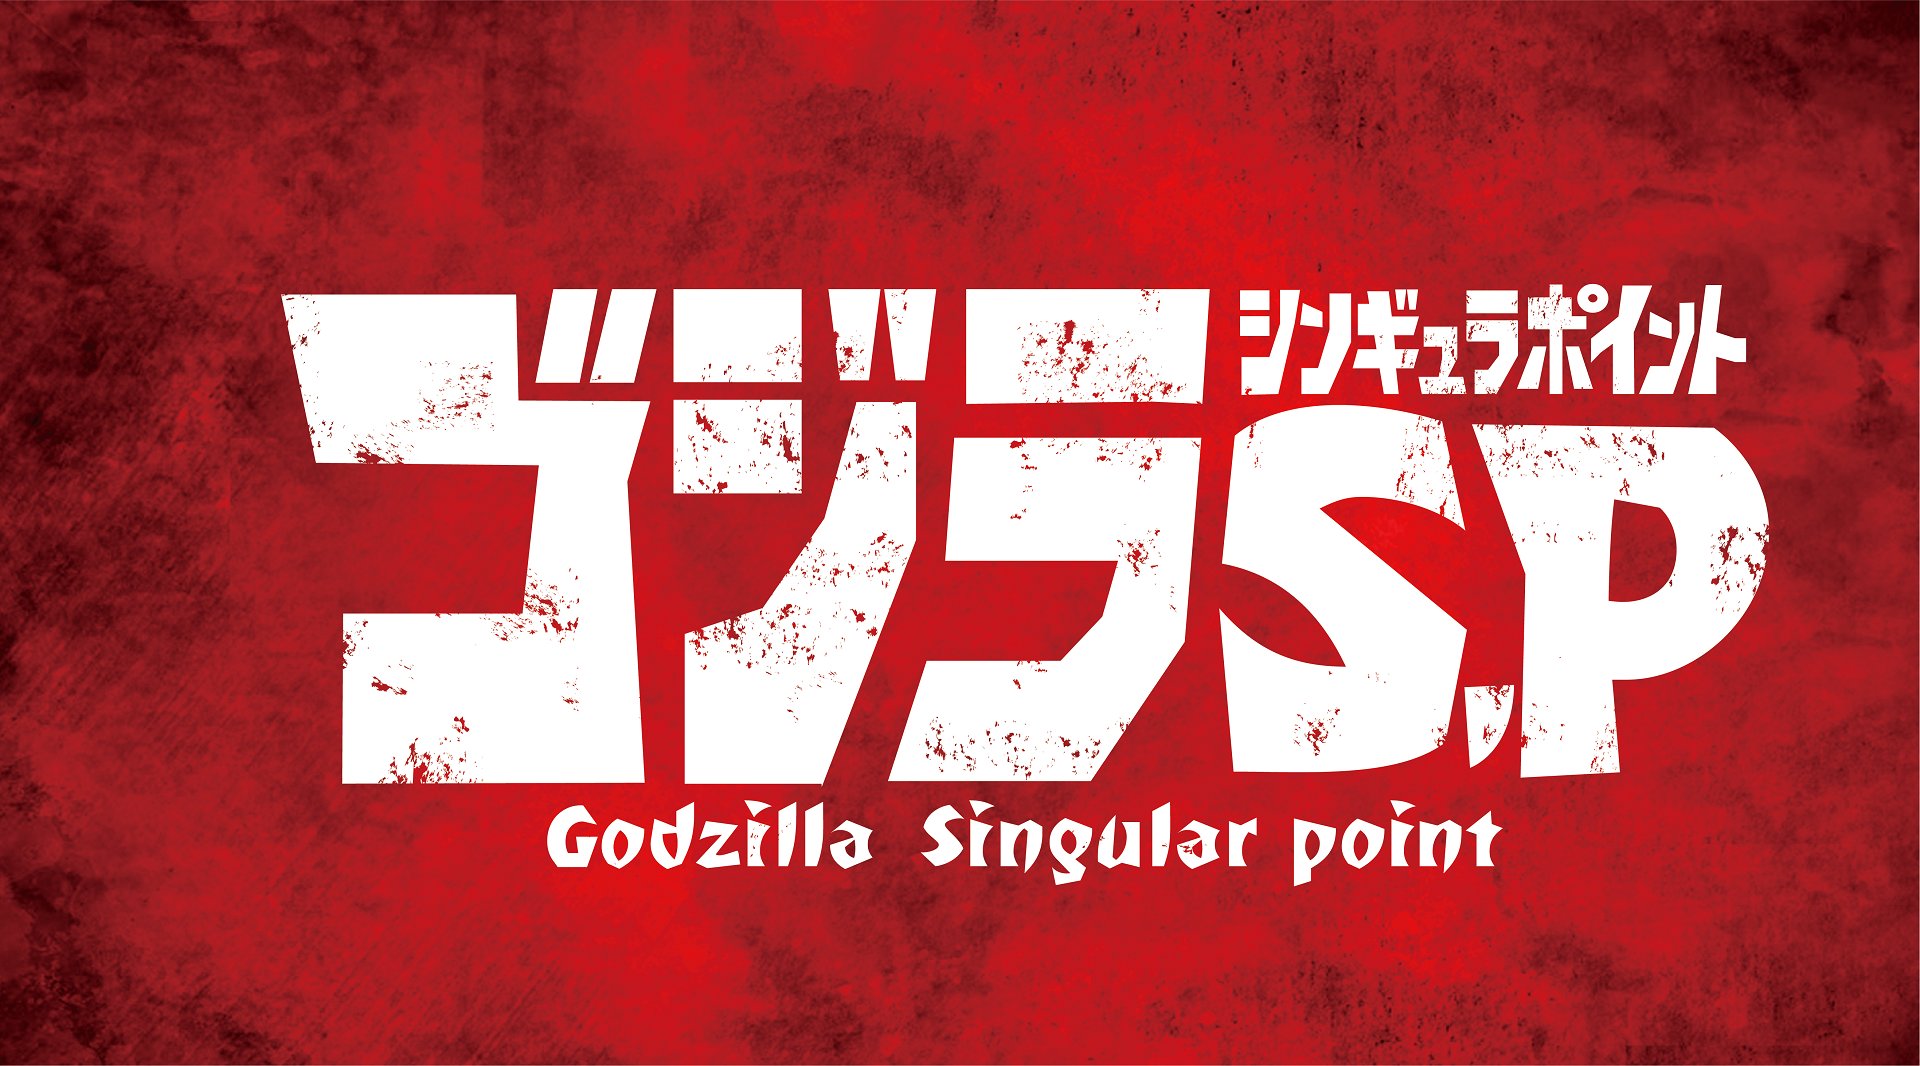 GODZILLA: SINGULAR POINT - Trailer for 2021 Premiere on Netflix!